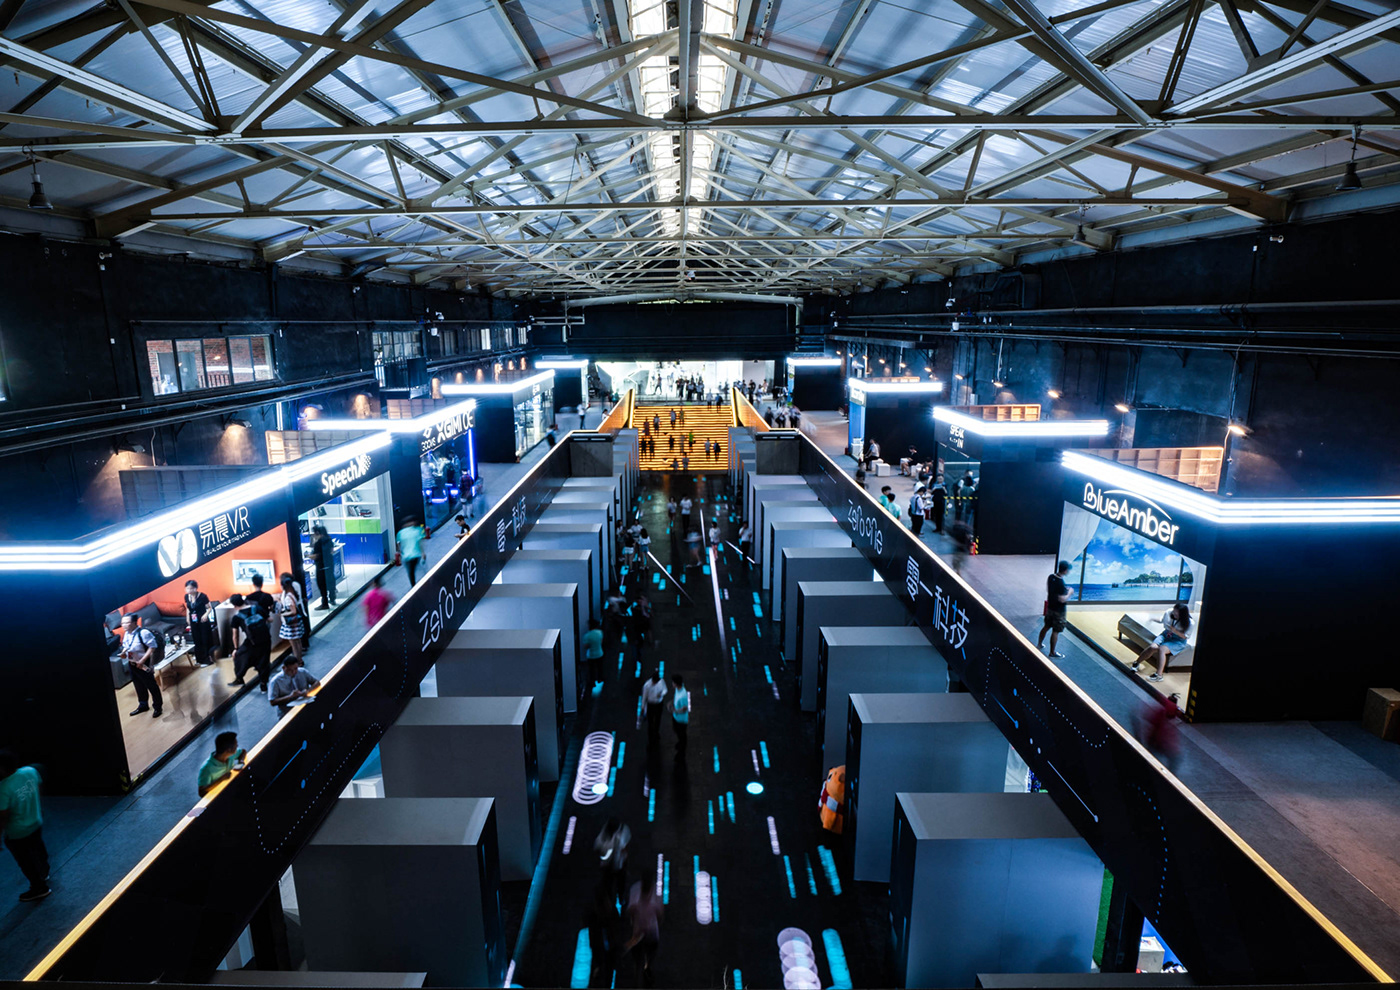 Technology festival Exhibition  china Shenzhen gradient digital factory